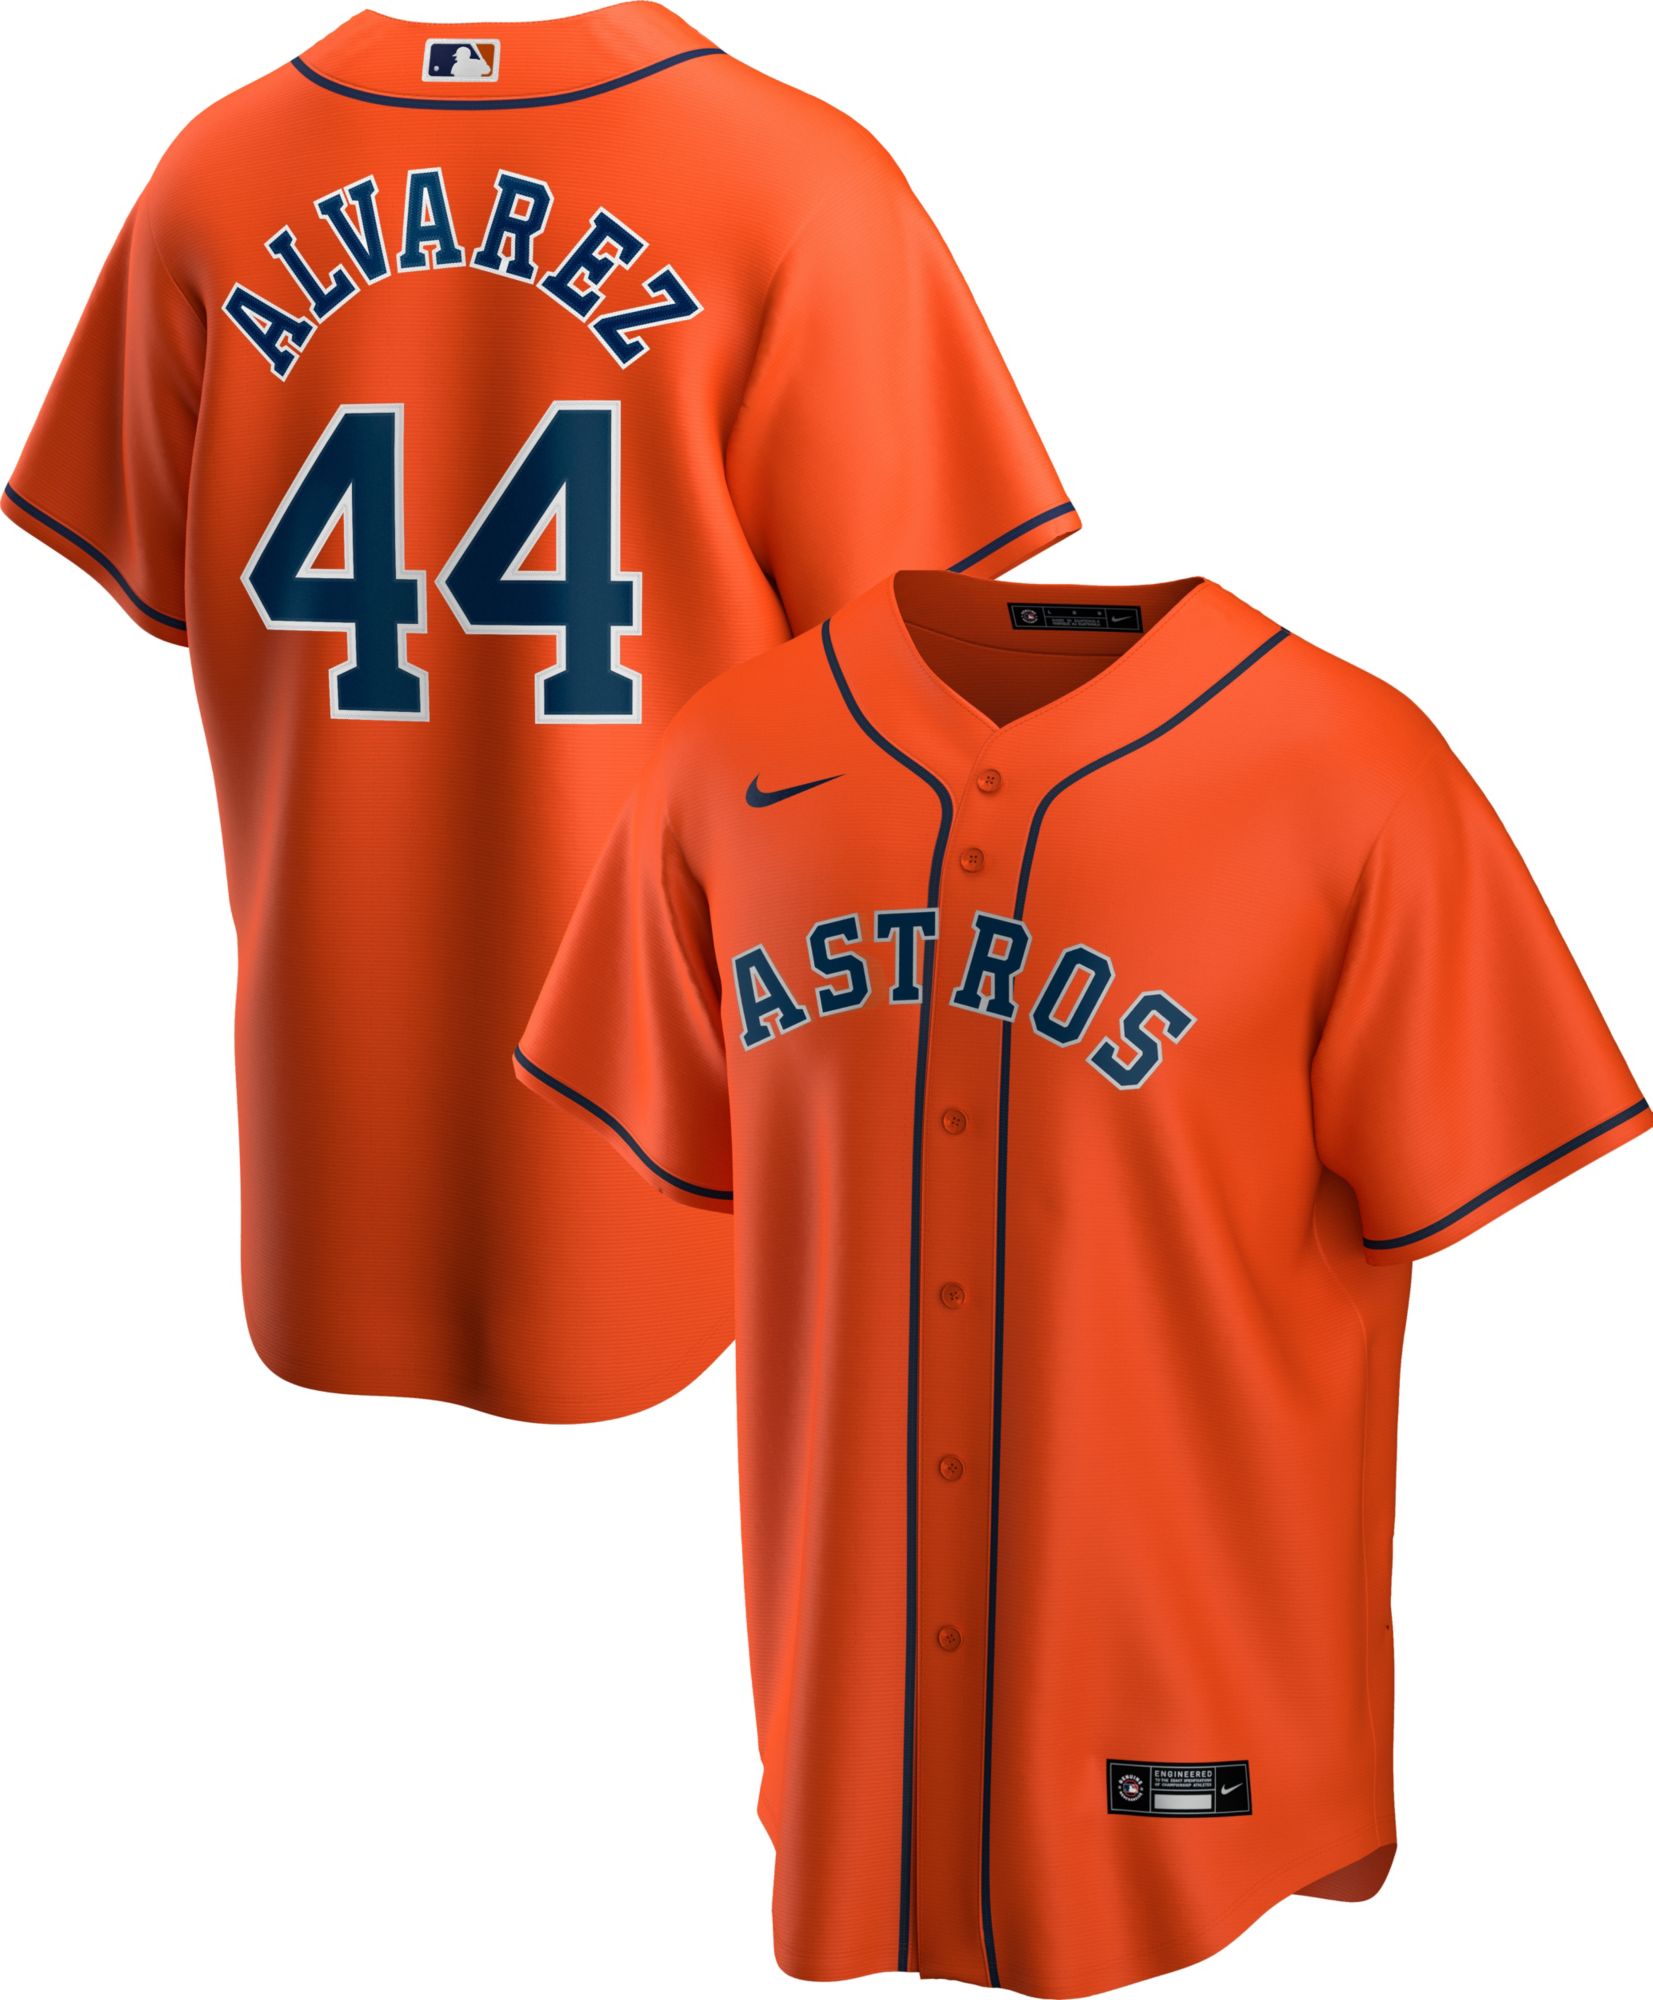 Astros jersey number